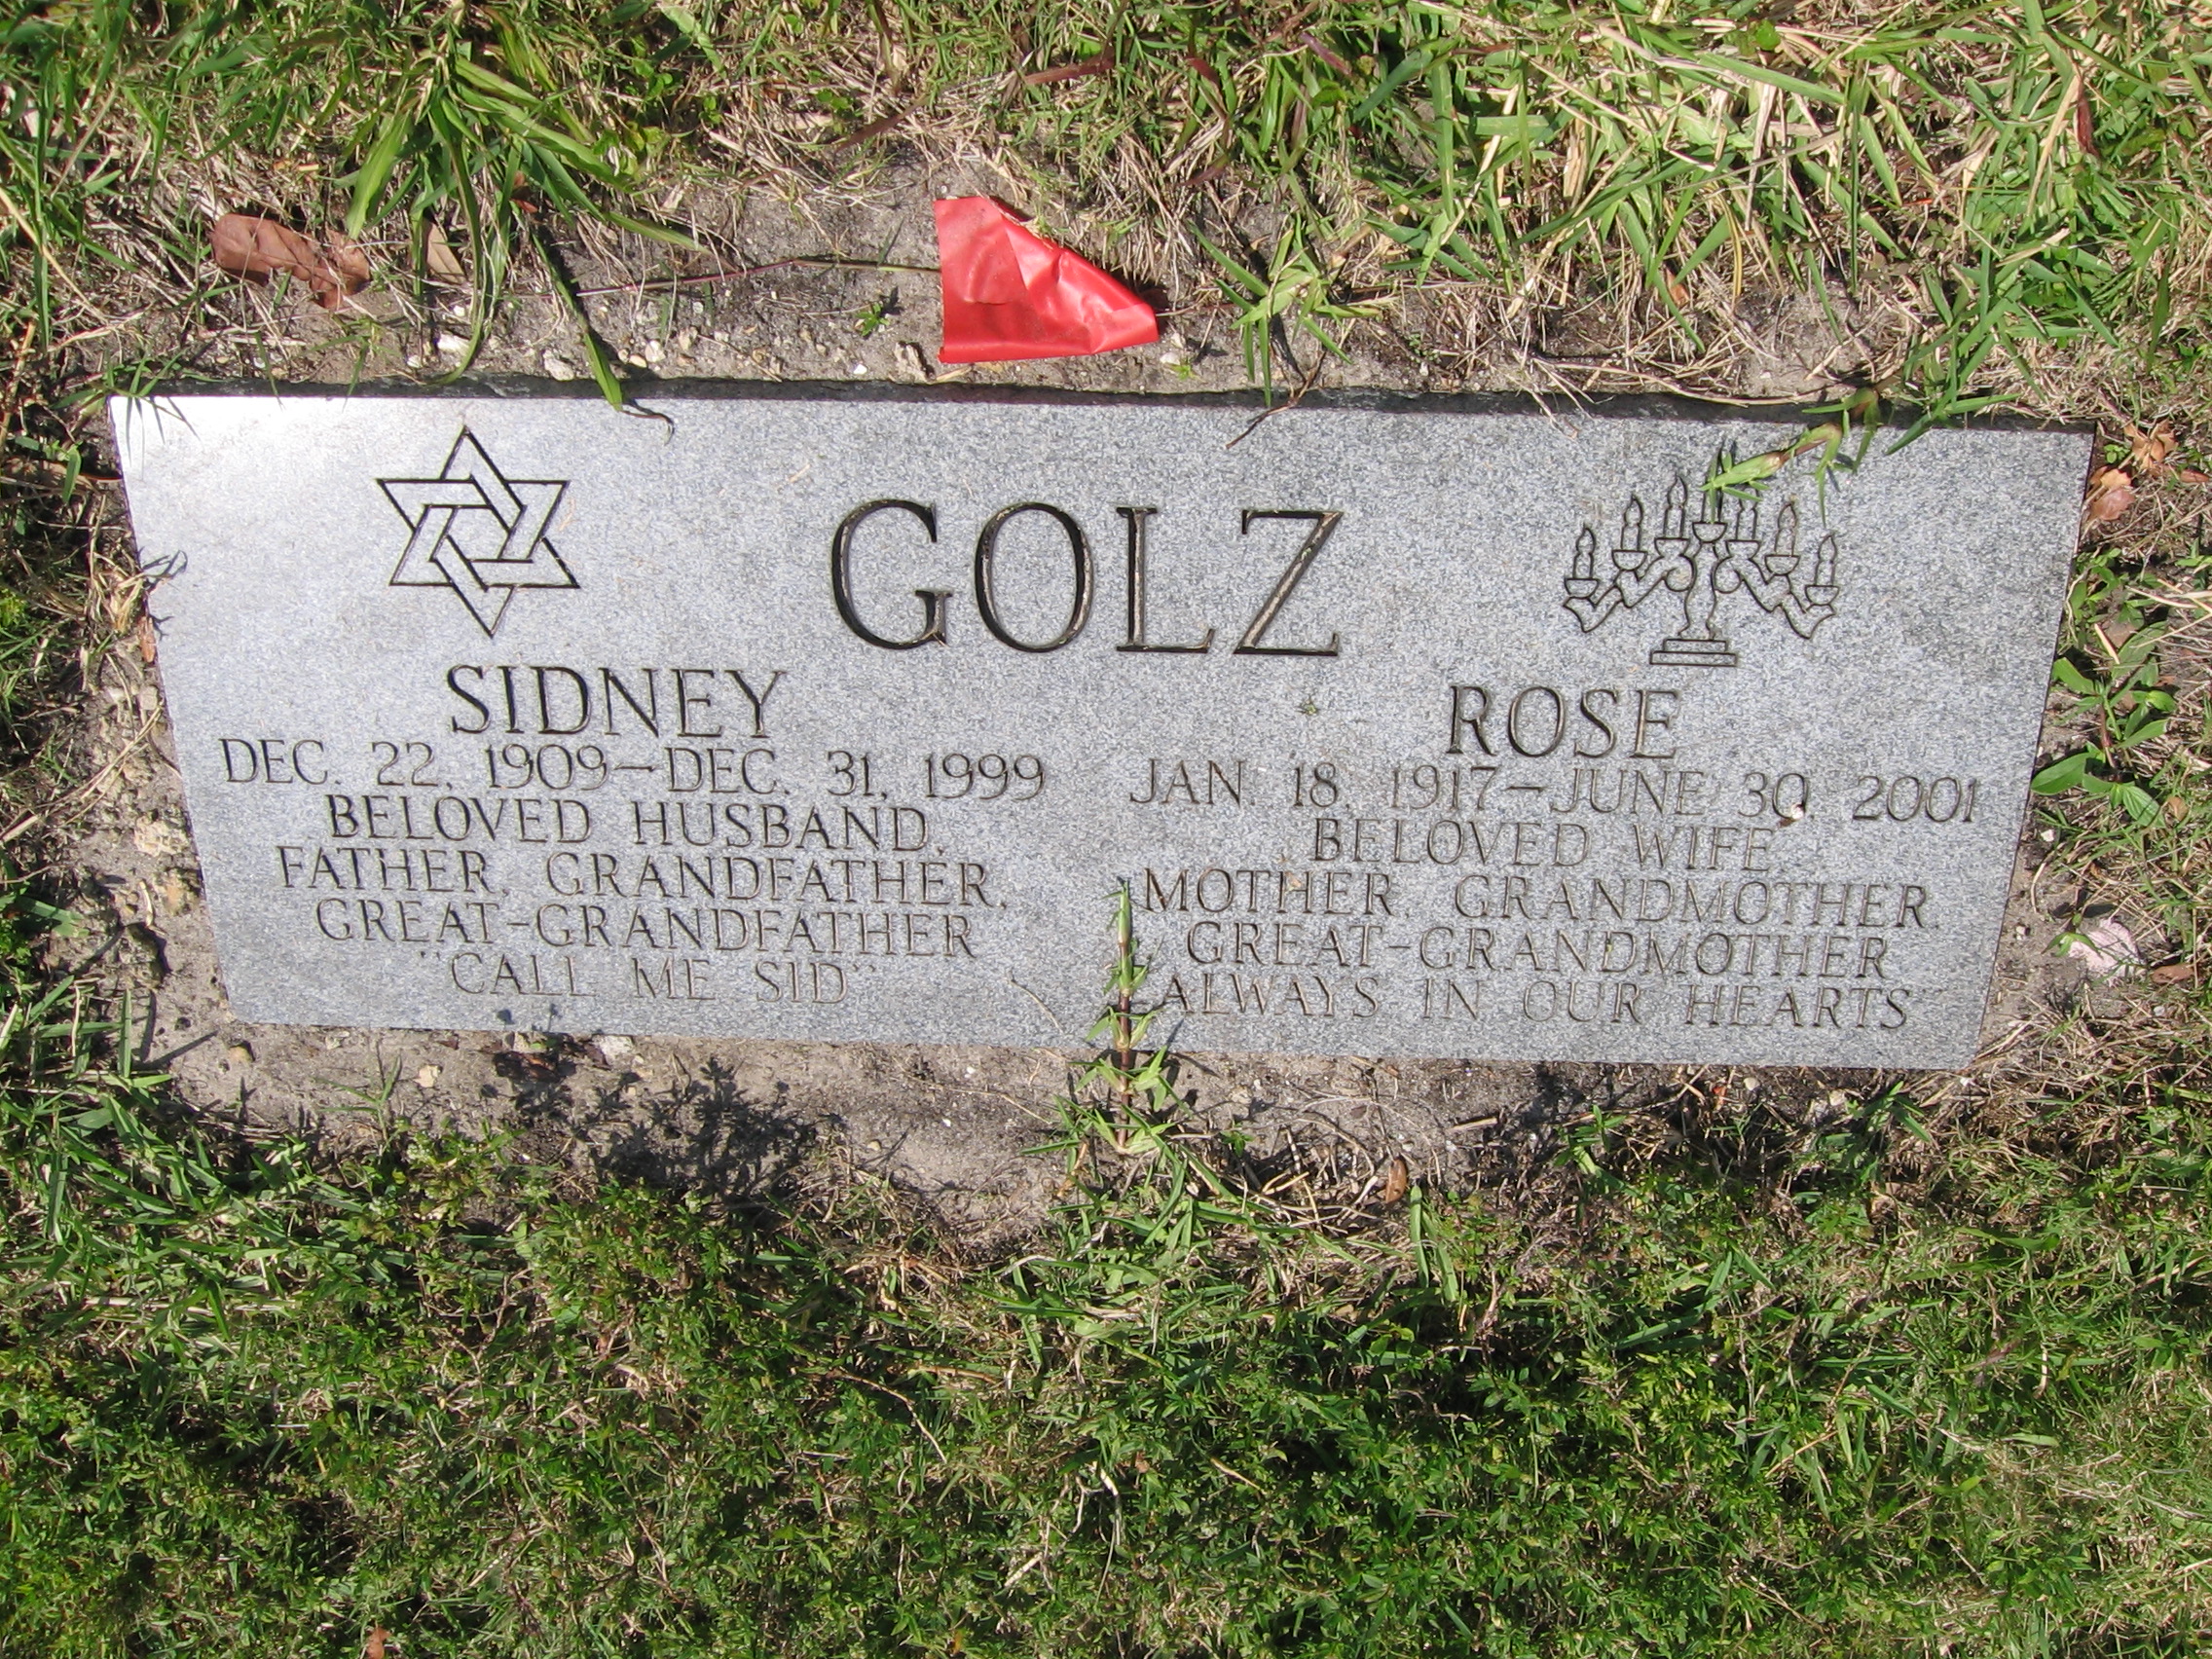 Rose Golz